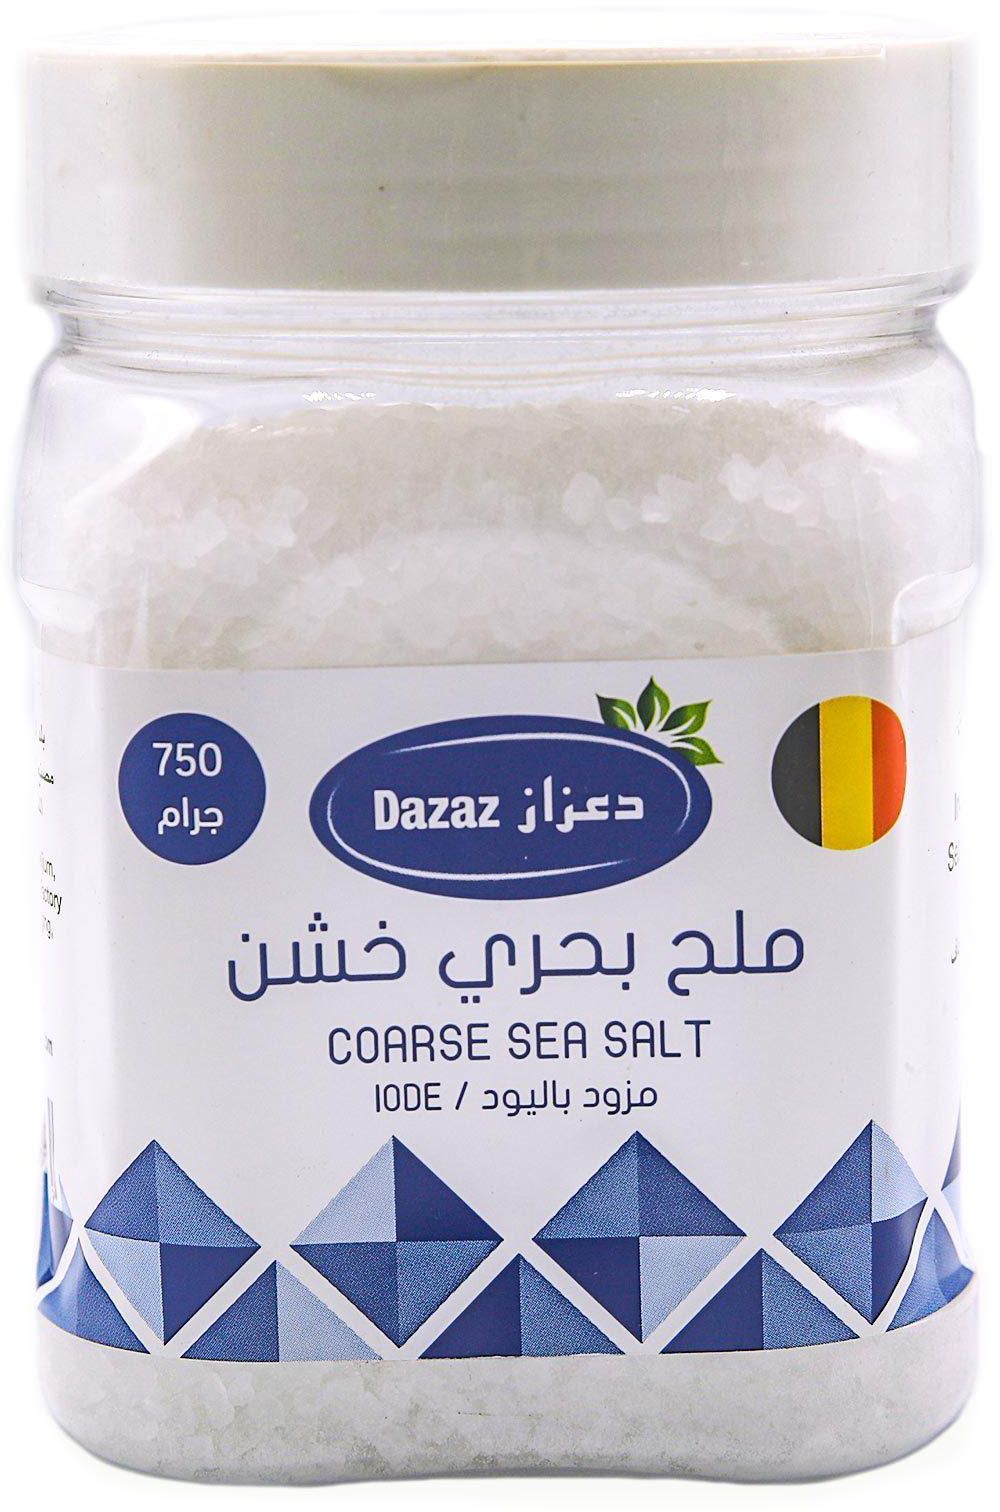 Dazaz coarse sea salt granules 750 g